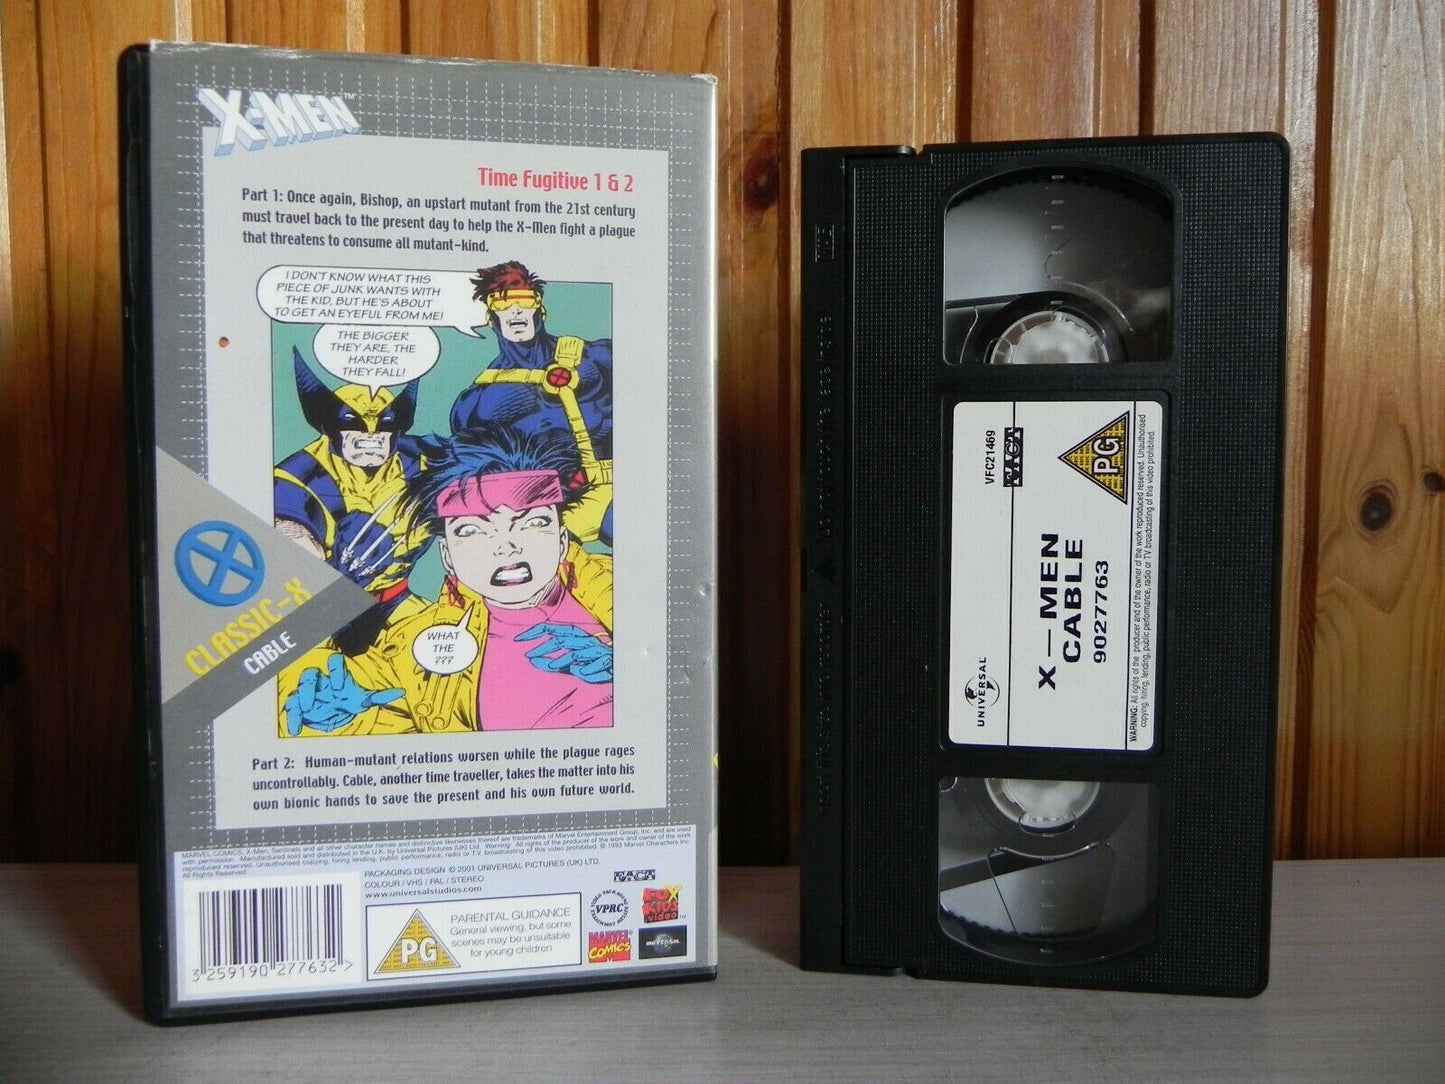 X-Men - Fox Kids Video - Classic-X - Cable - Time Fugitive 1&2 - Cartoon - VHS-